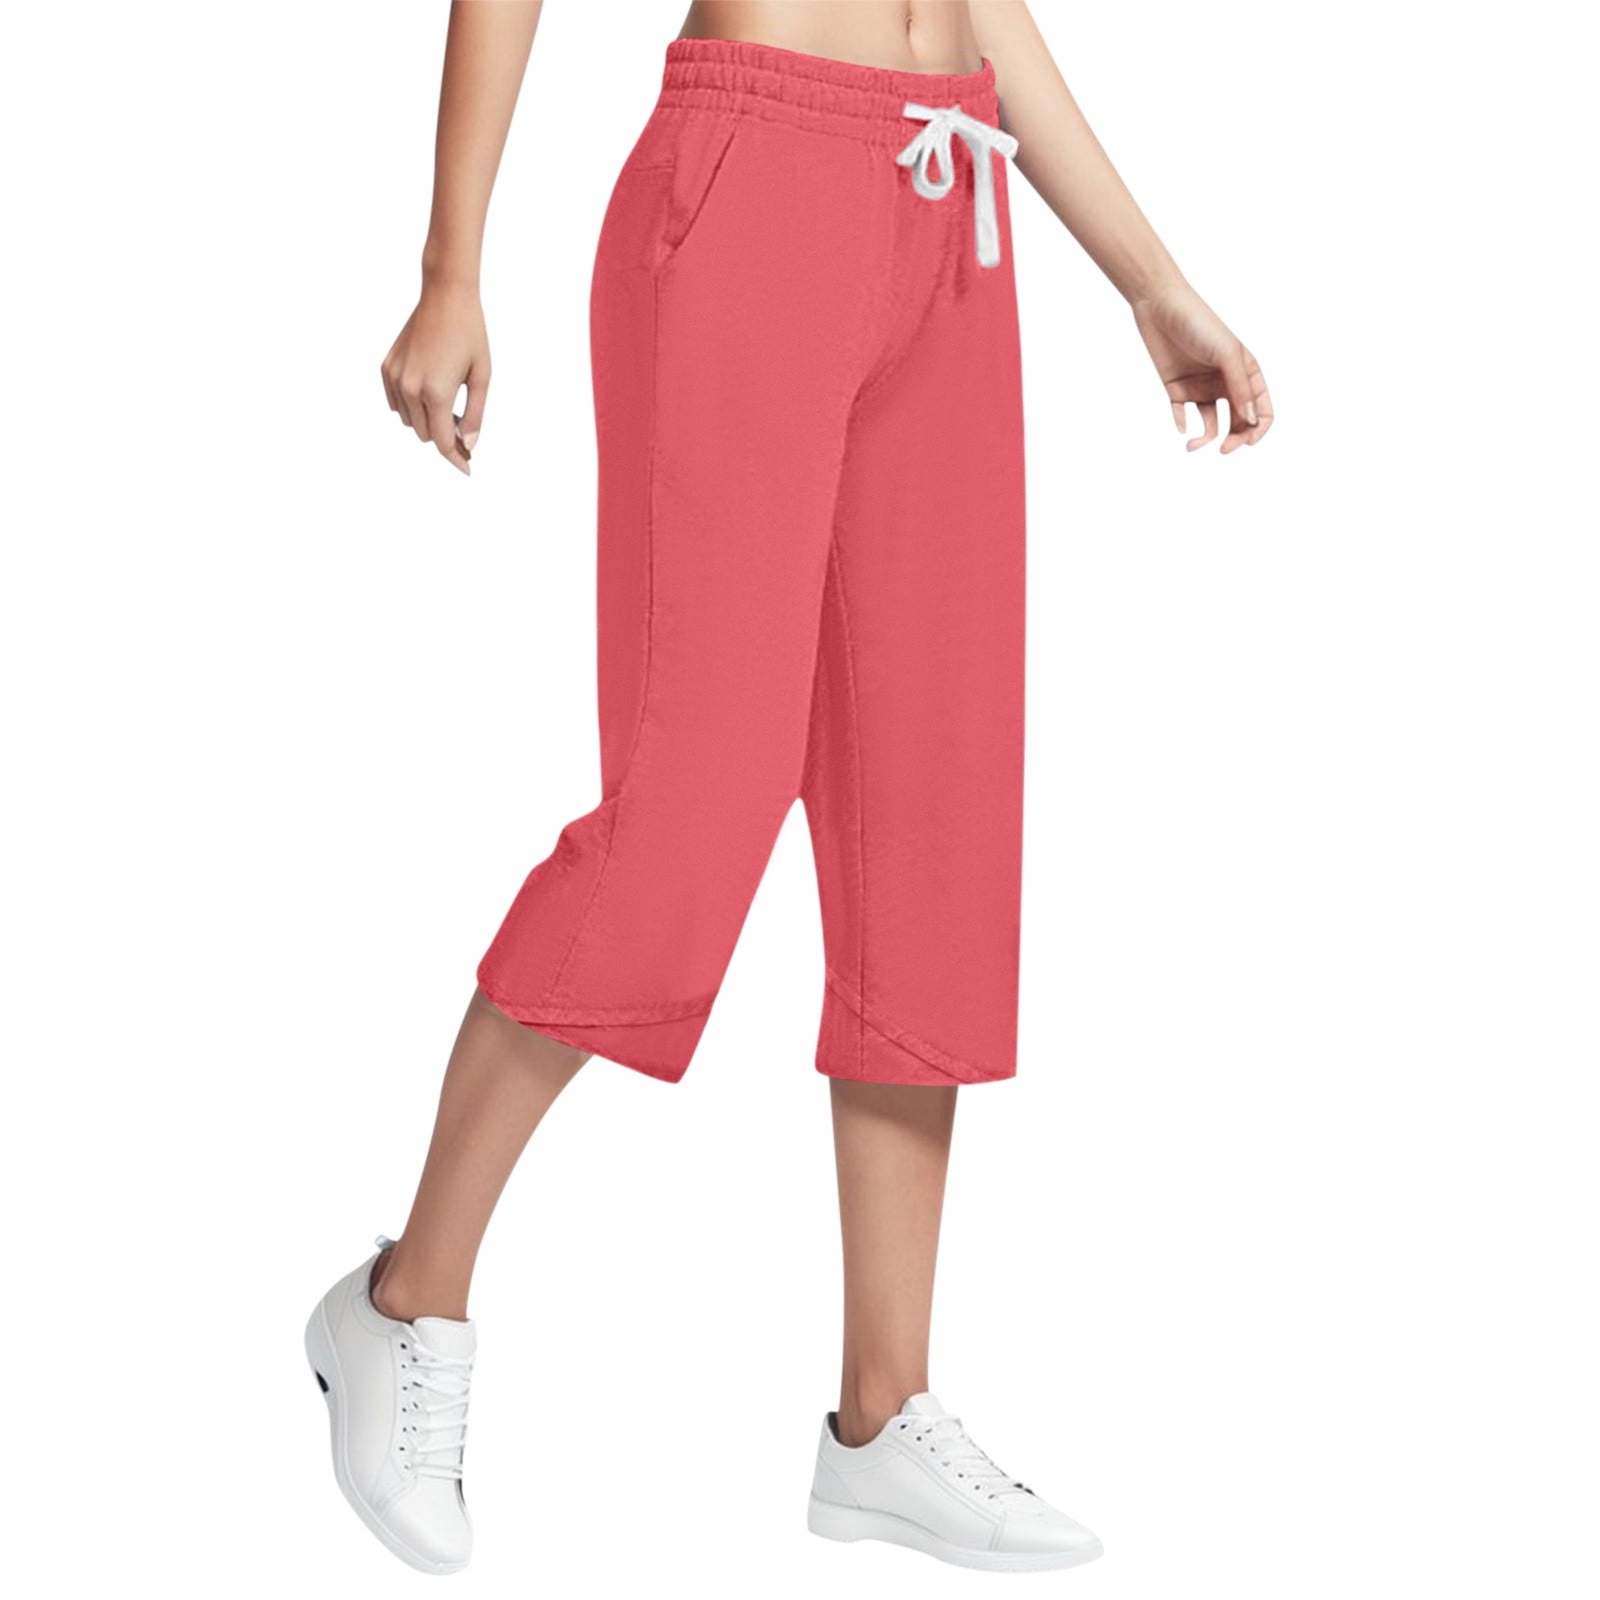 PMUYBHF Yoga Pants with Pockets Tall Women 34-36 Inseam Women